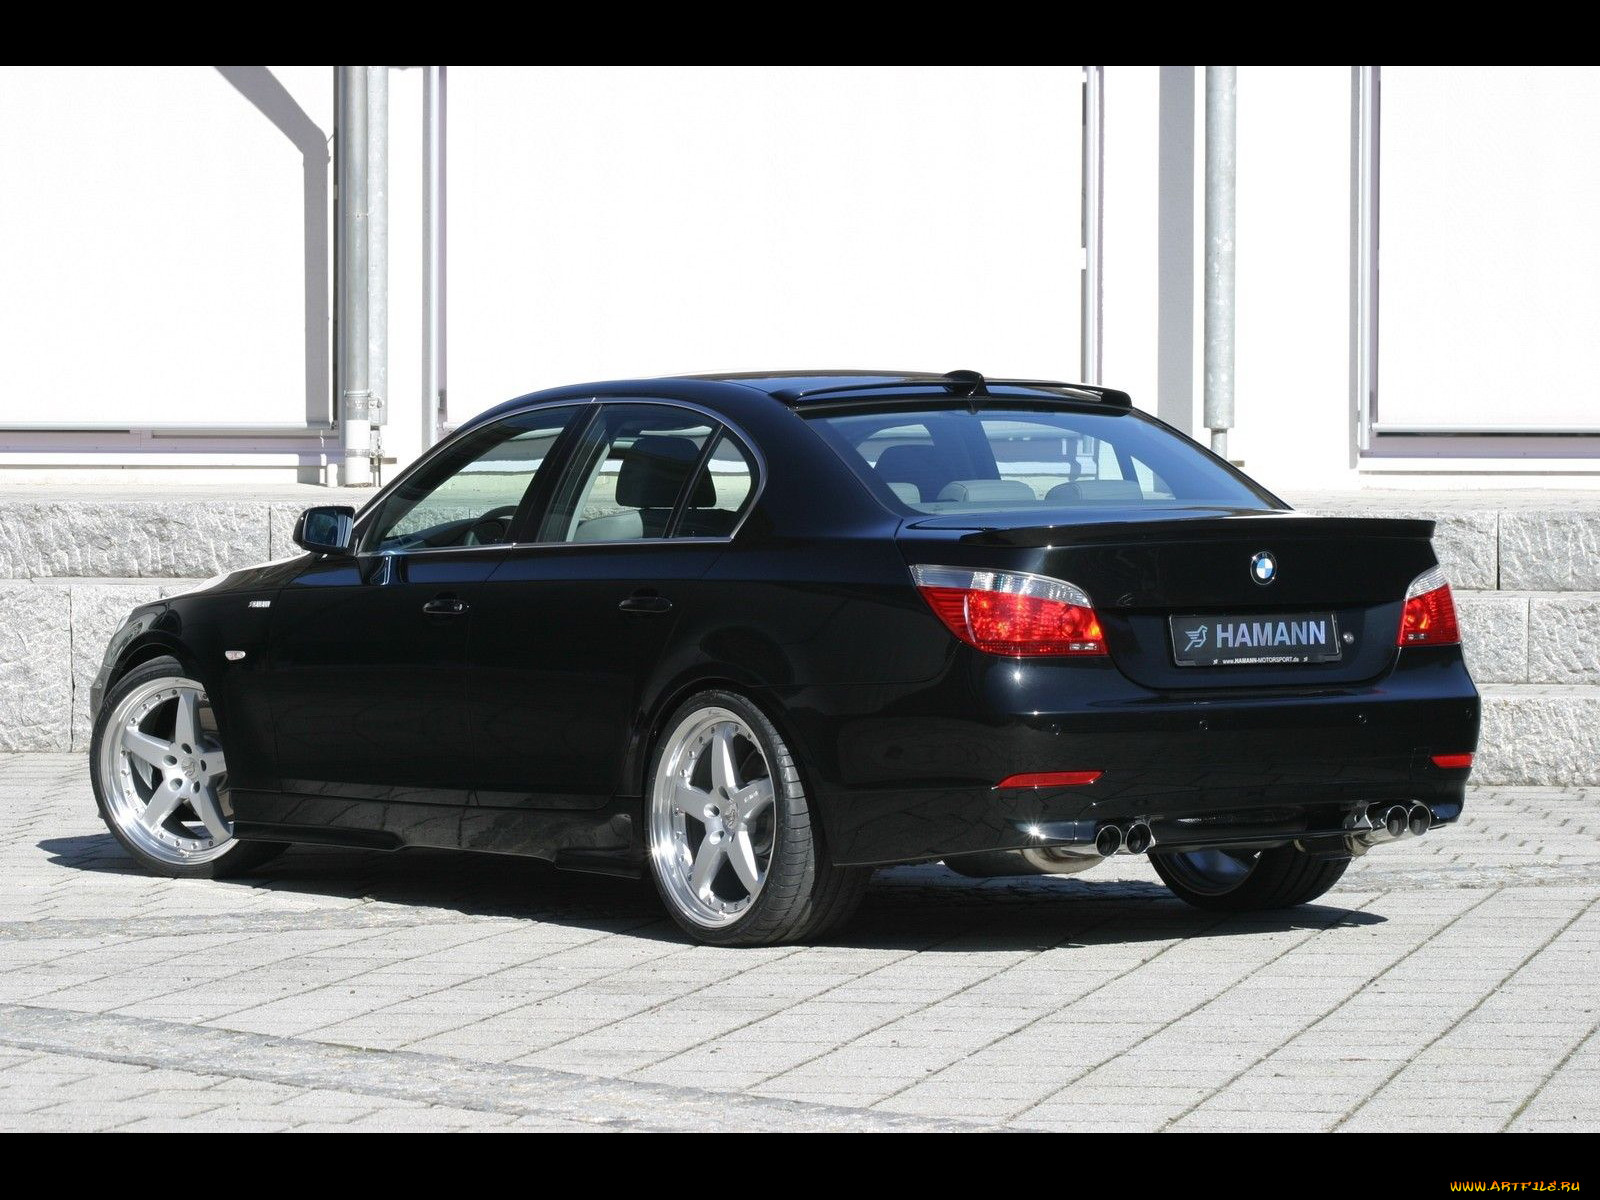 5 series e60. BMW 5 Series (e60). BMW 5 Series e60 2005. BMW sirius5 e60. BMW 5 e60 Hamann.